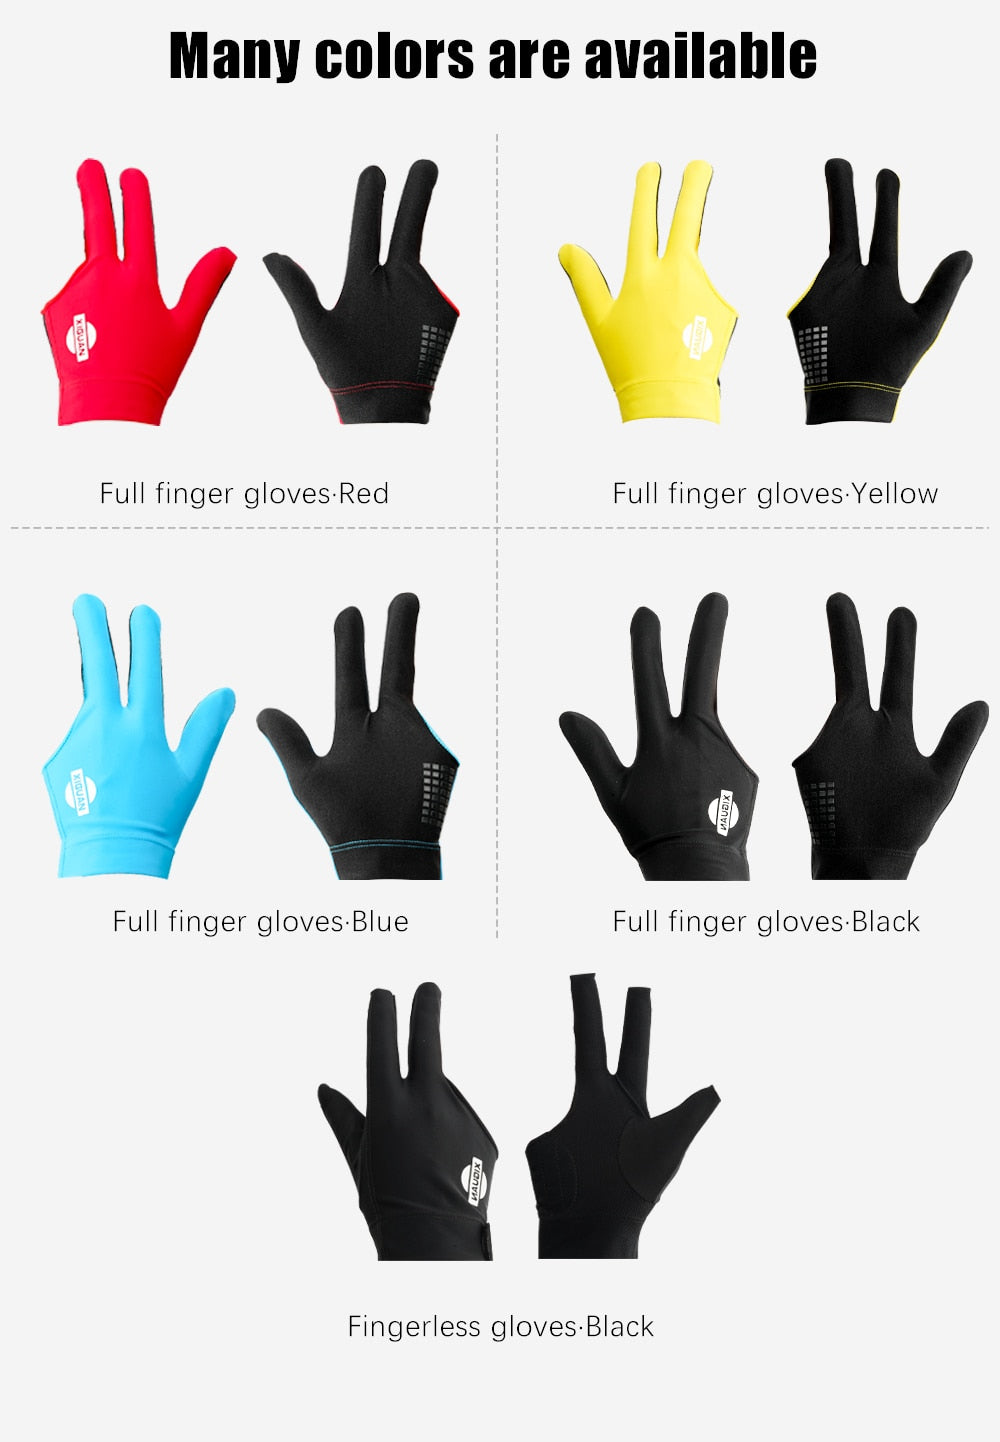 XIGUAN  Non-slip One Pieces Three Fingers Gloves